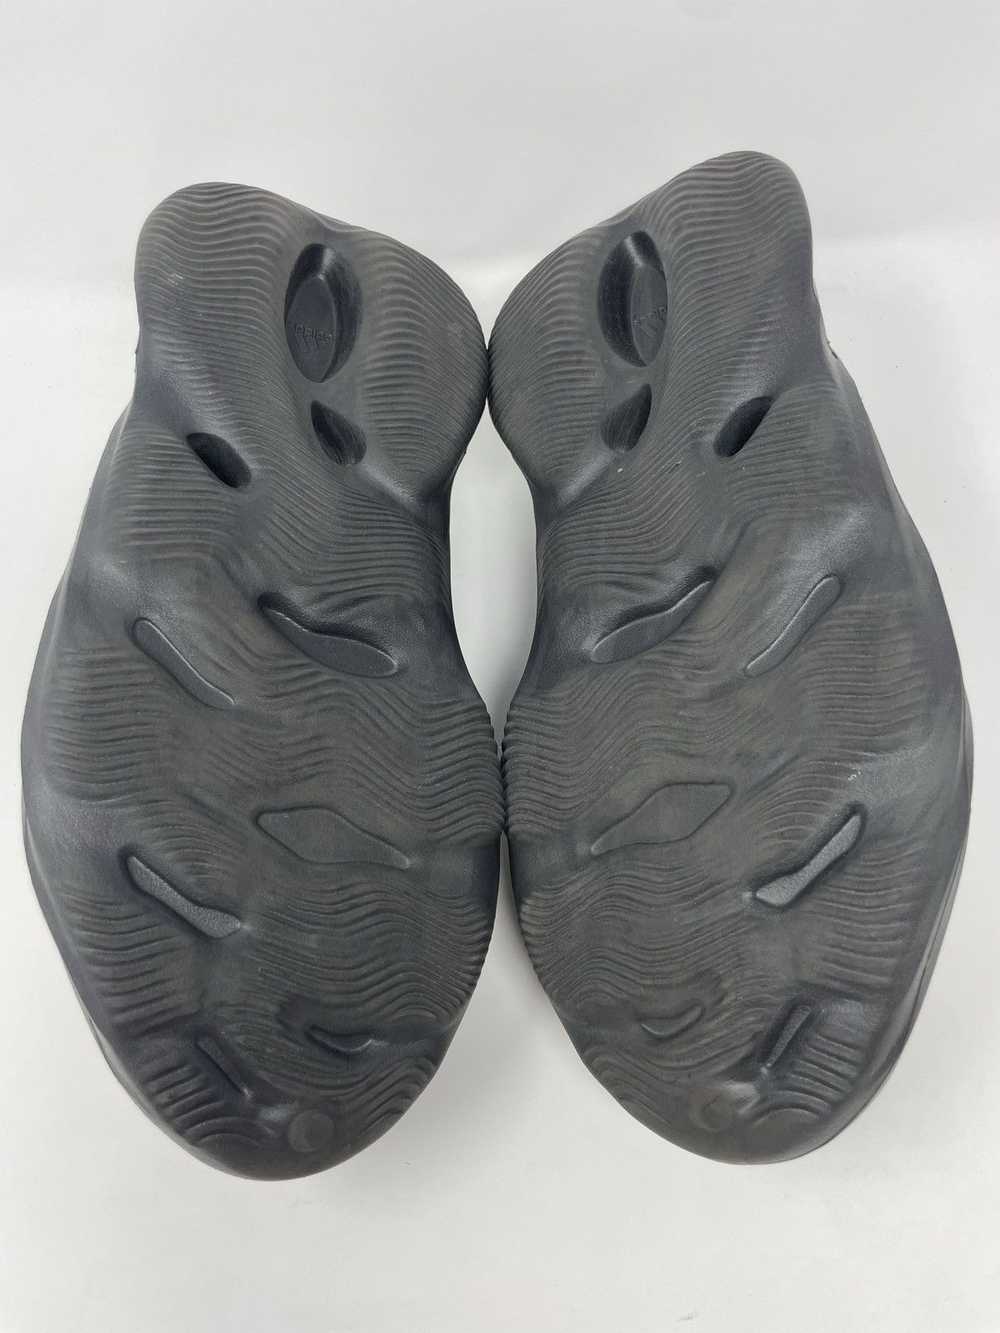 Adidas Yeezy Foam Runner Onyx - image 6